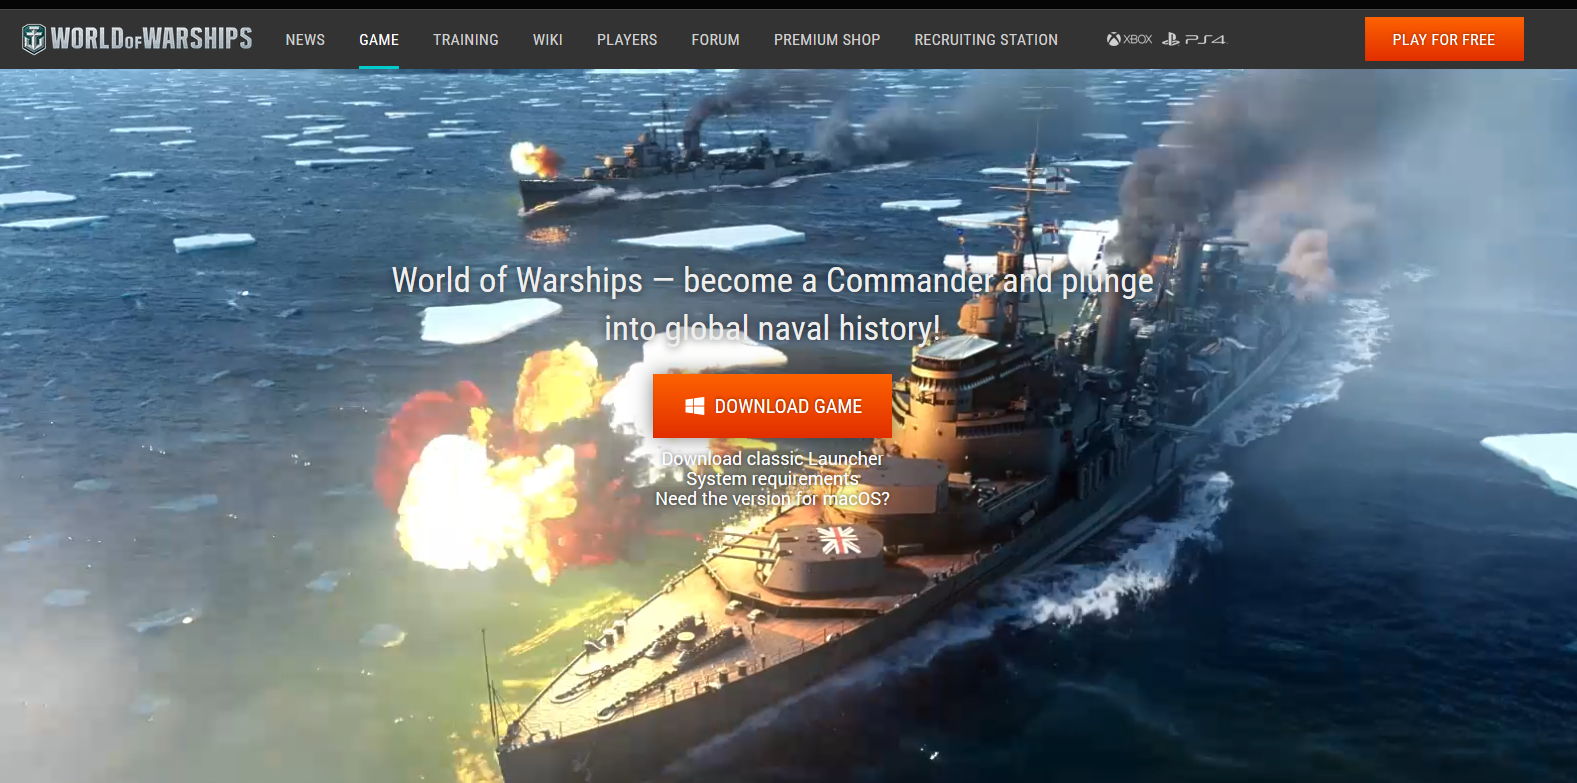 applying invite code world of warships